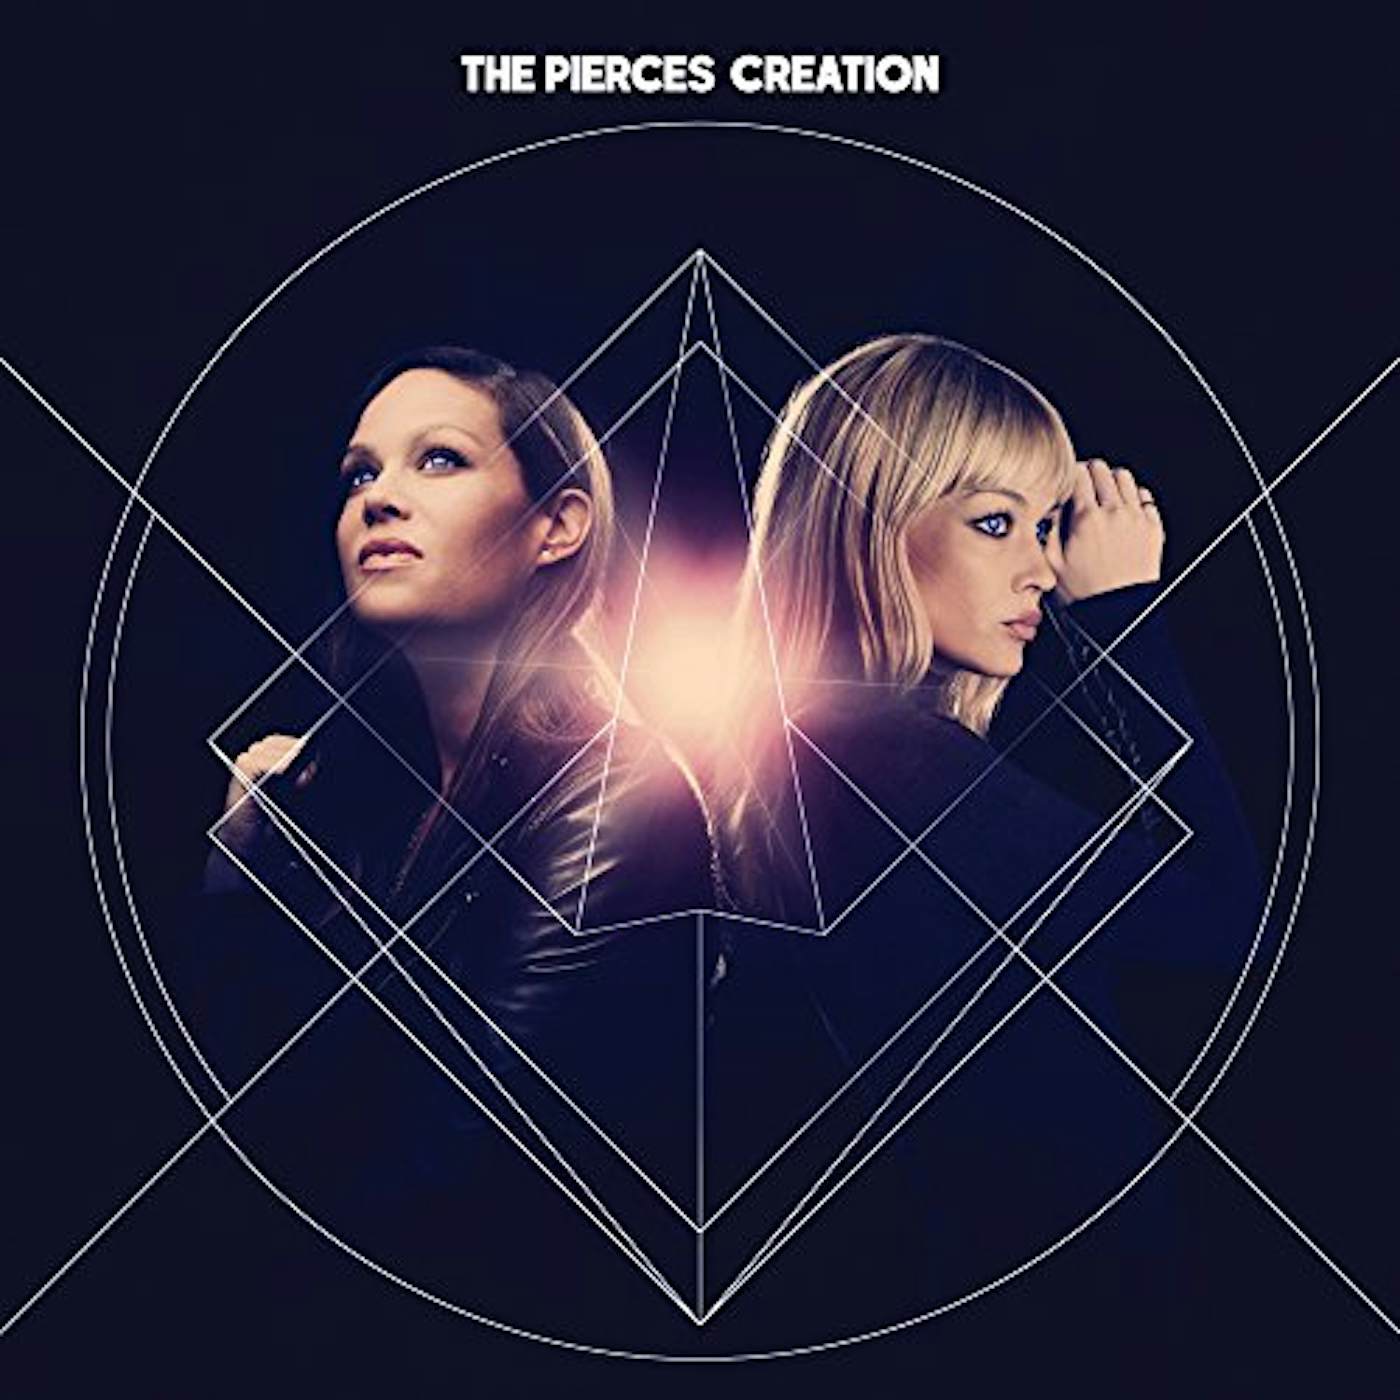 The Pierces CREATION CD